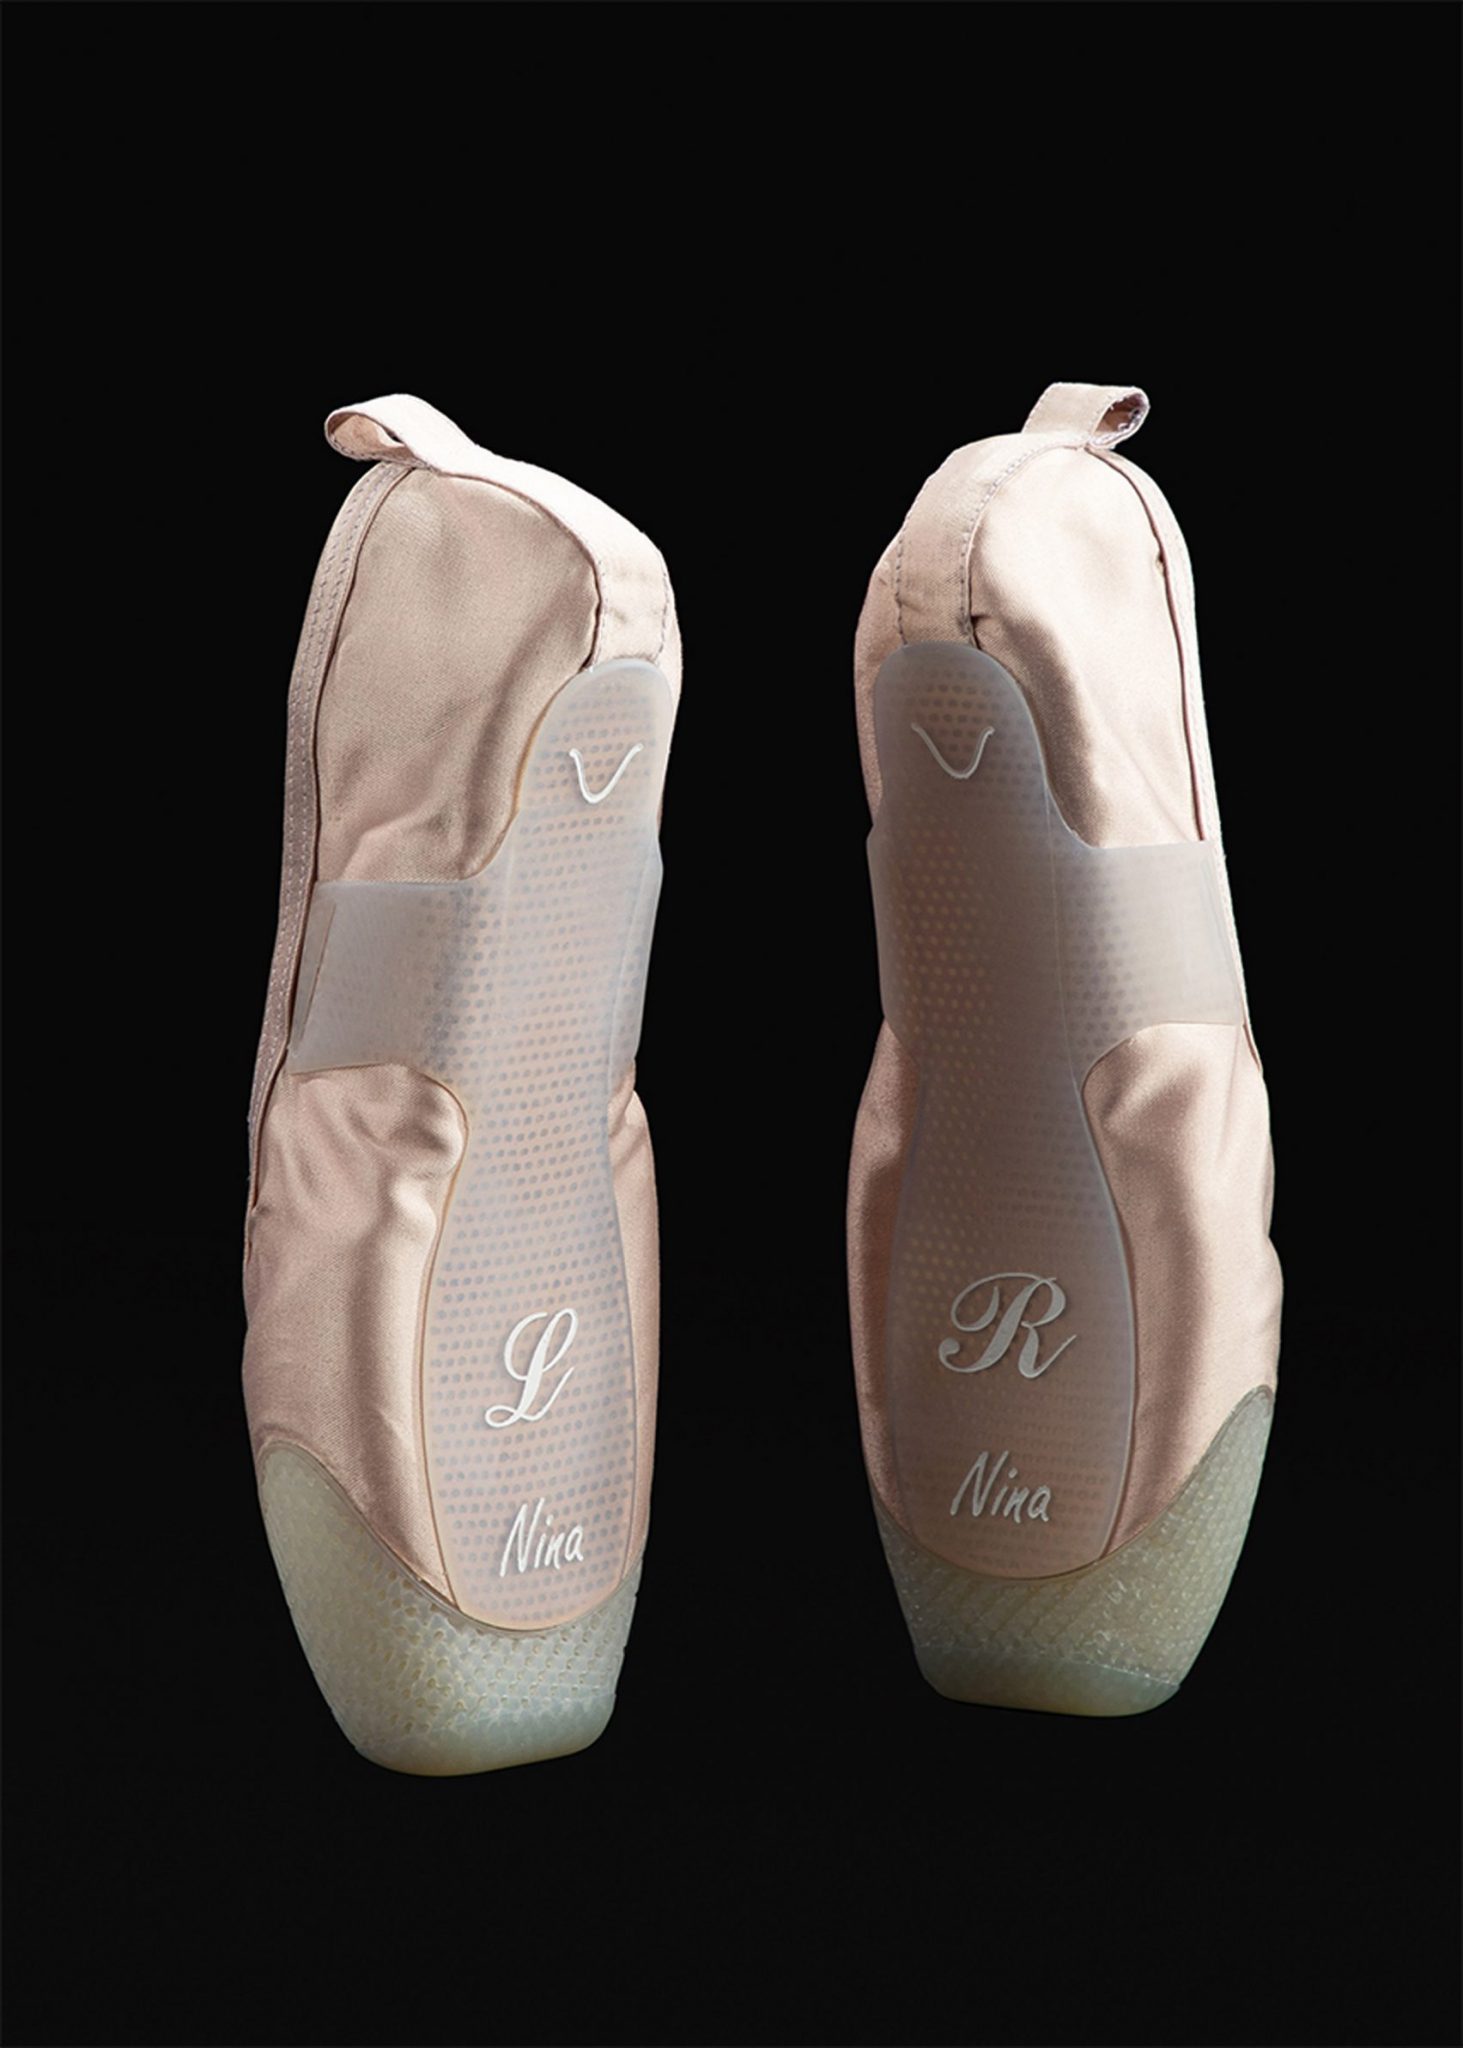 A close up of the custom-made P-rouette shoe. Image via Bezalel Academy of Art and Design.